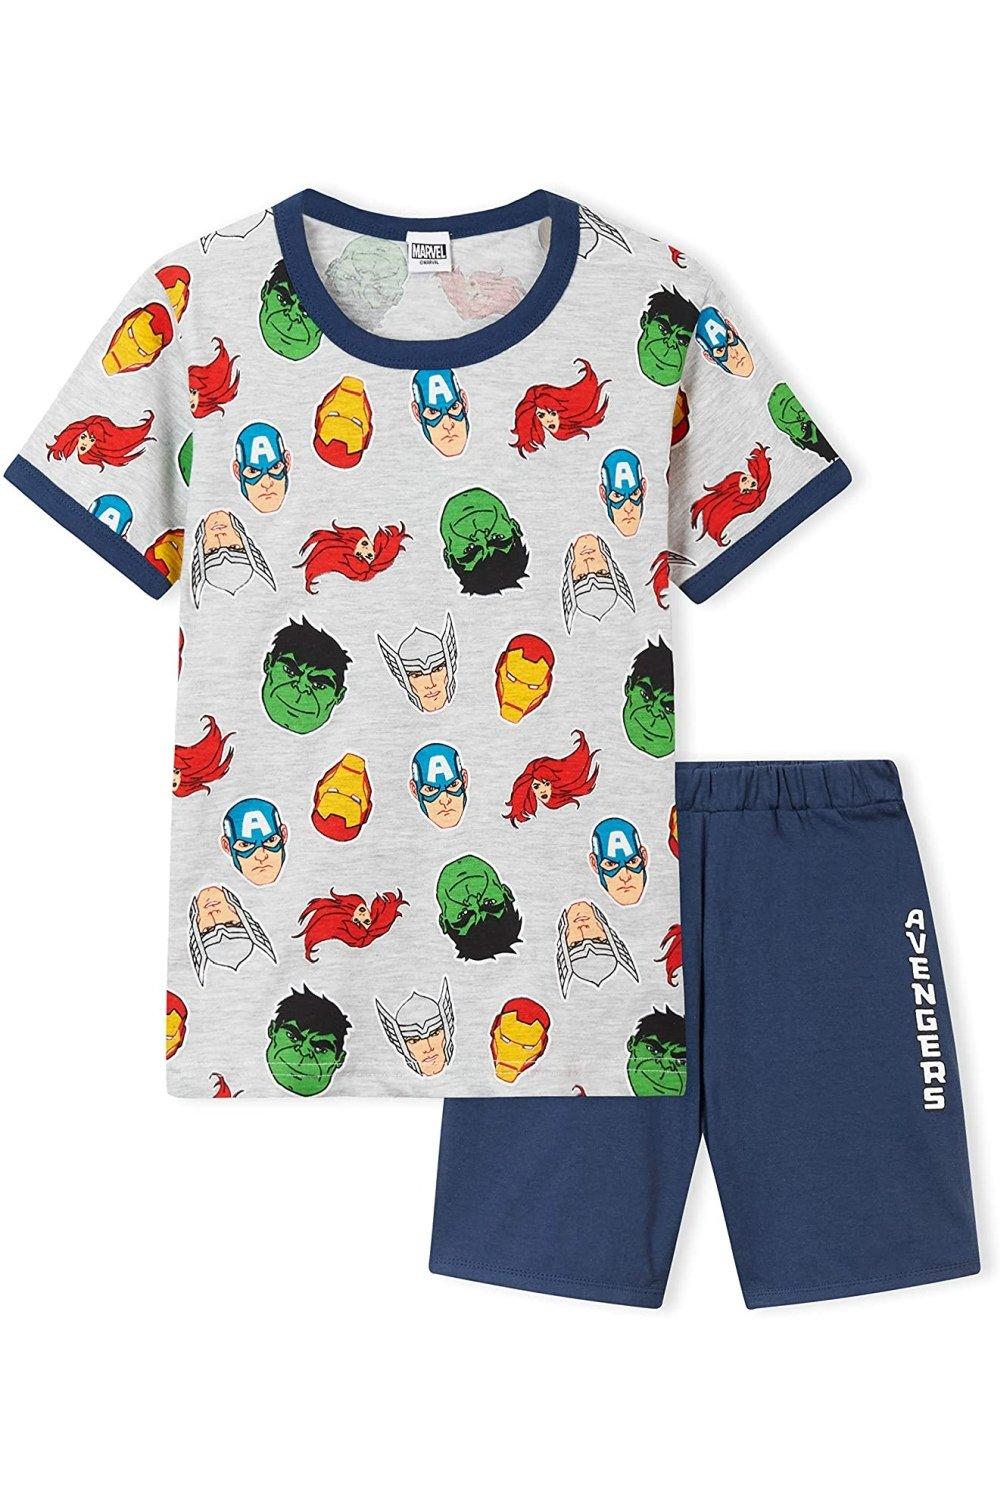 Avengers Short Pyjama Set